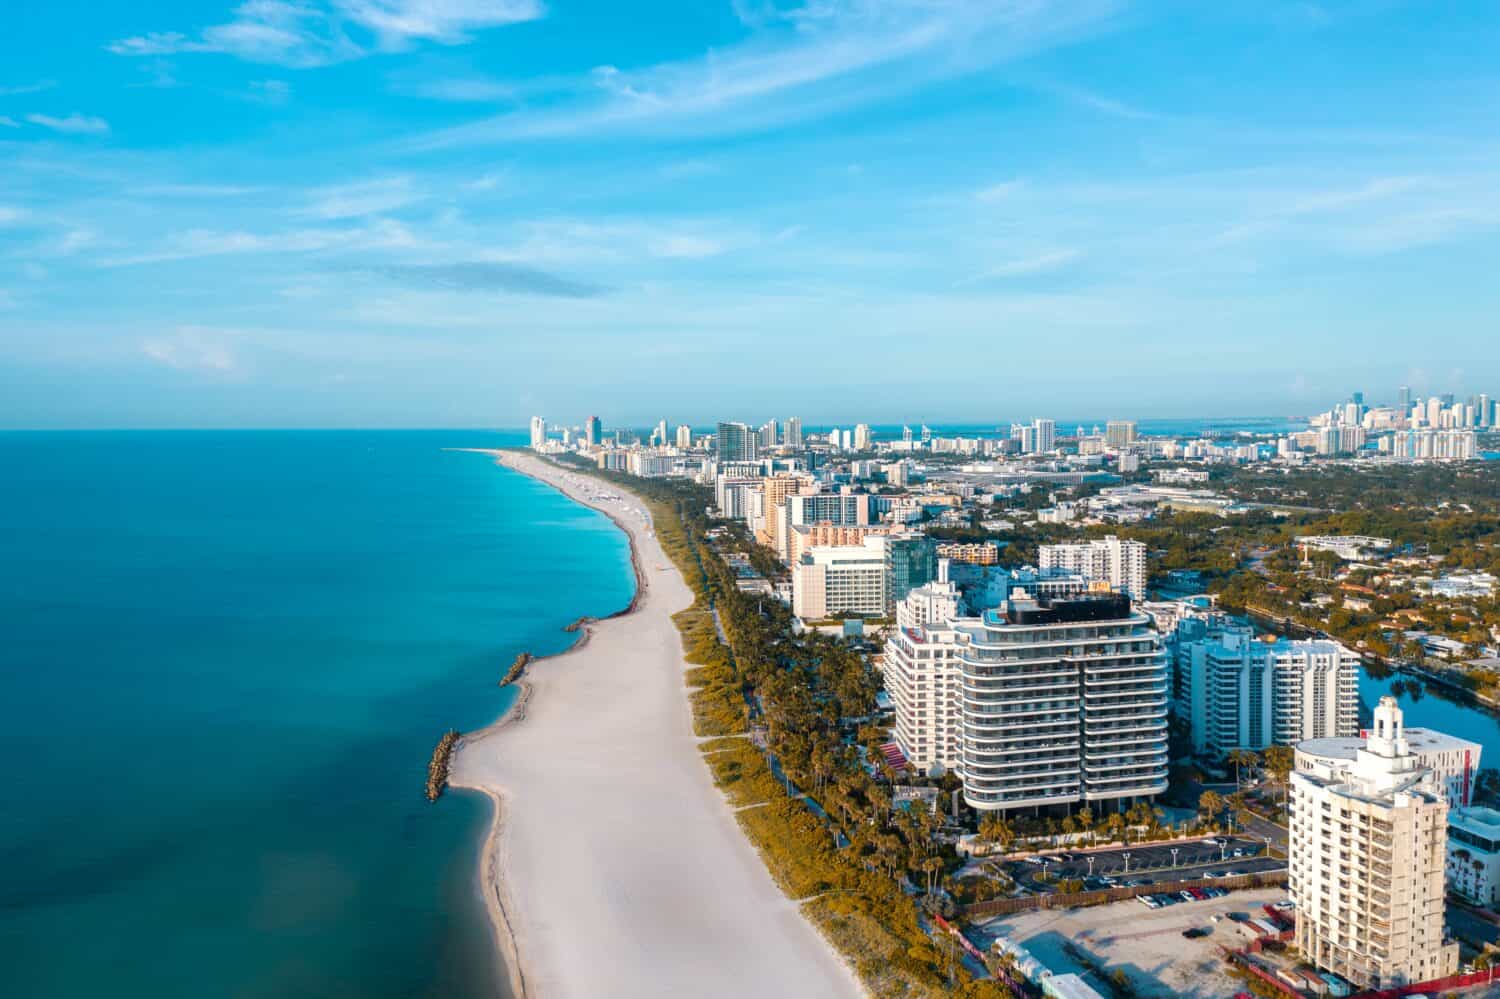 Panoramic view of Luxury condos in Miami Beach Florida